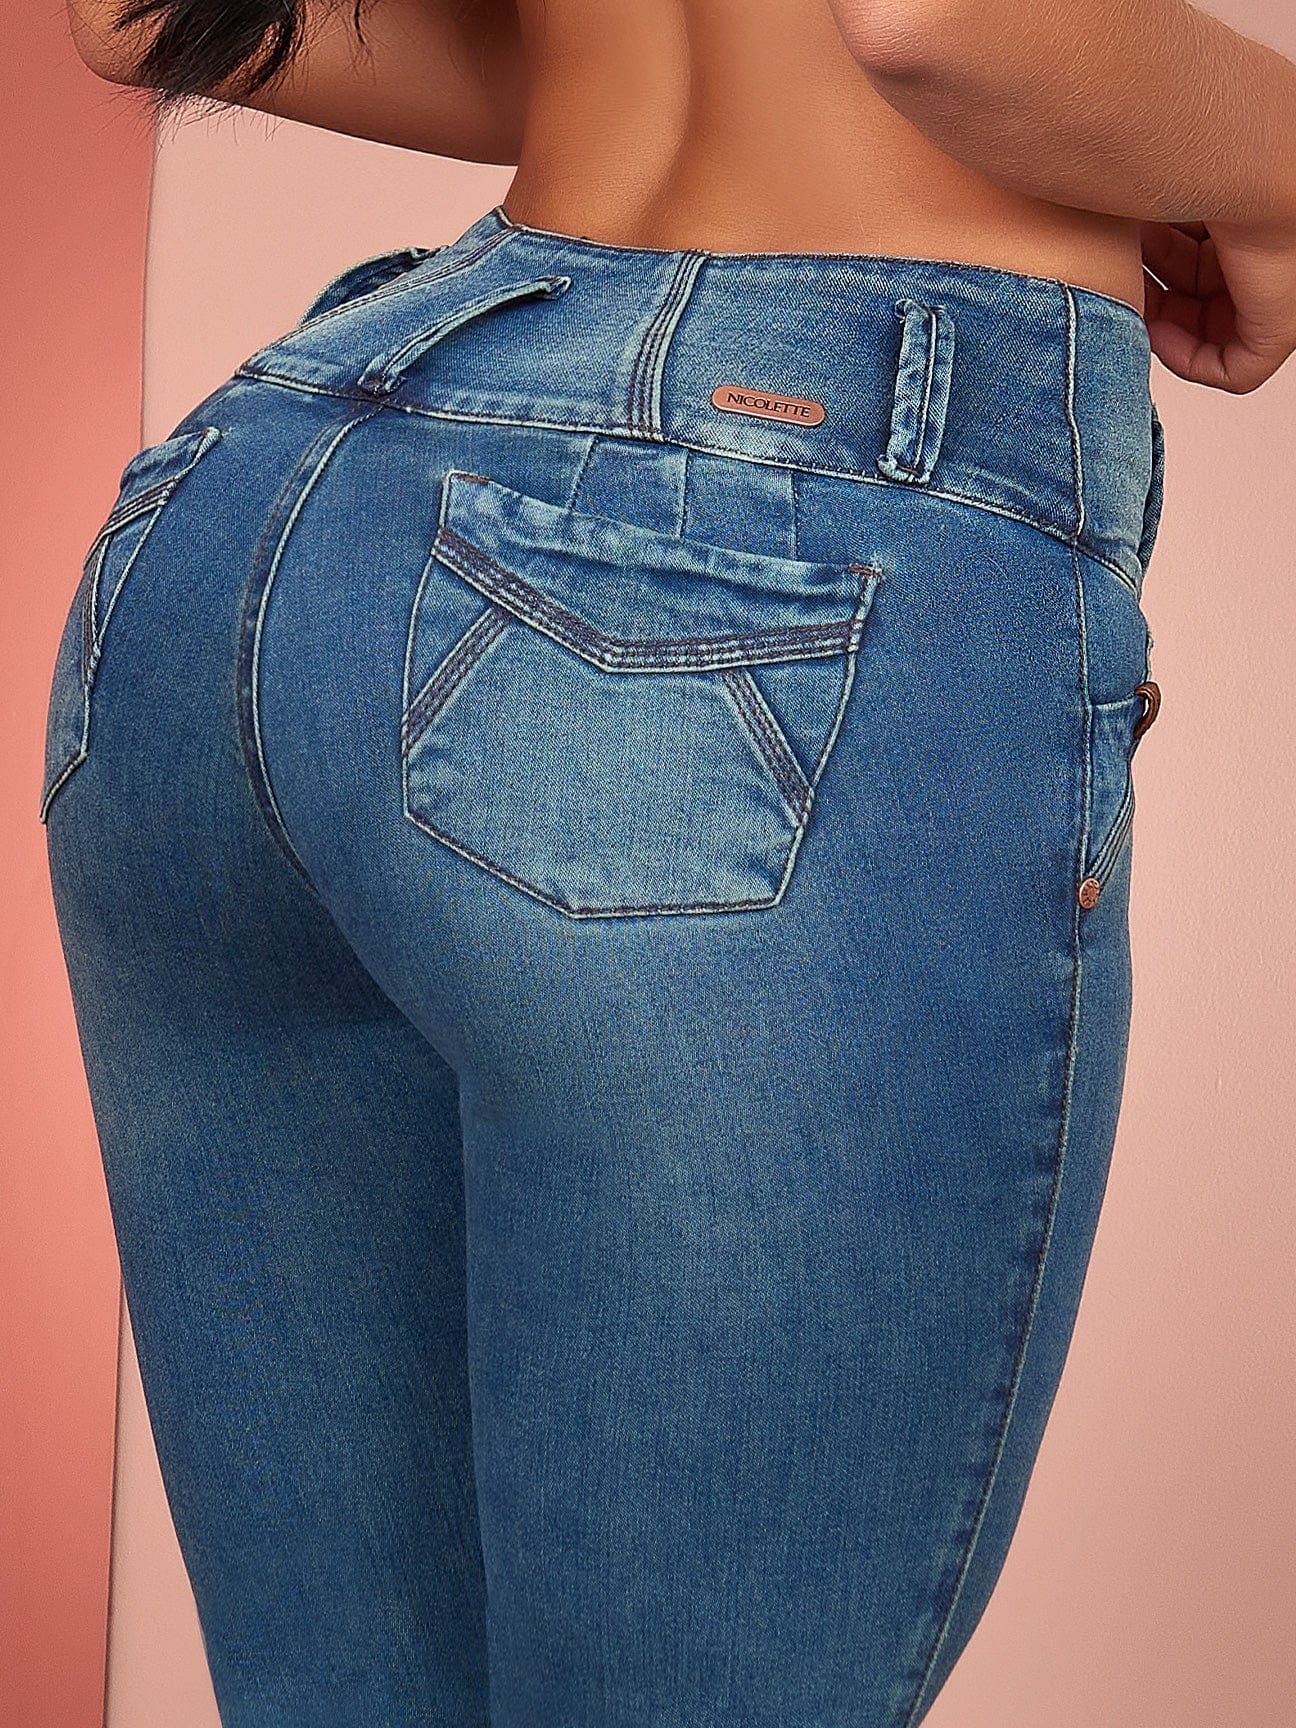 BUY BRAZIL JEANS & Fashion on X: #1 BRAZILIAN BUTT LIFT JEANS @rsturm1068 # jeans #buttcrush #buttlift #denim #bluejeans #denimjeans #style  #newcollection #news  / X